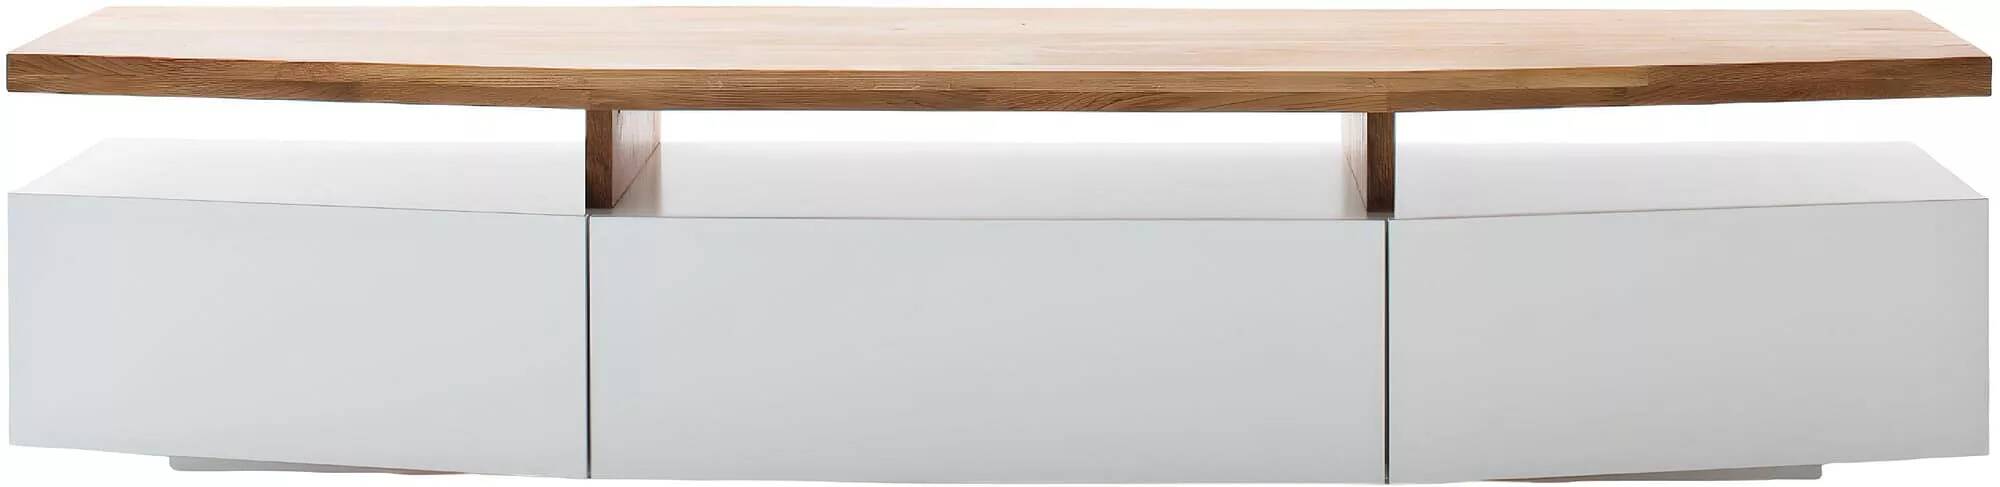 Meuble TV design blanc mat et chêne massif 3 tiroirs